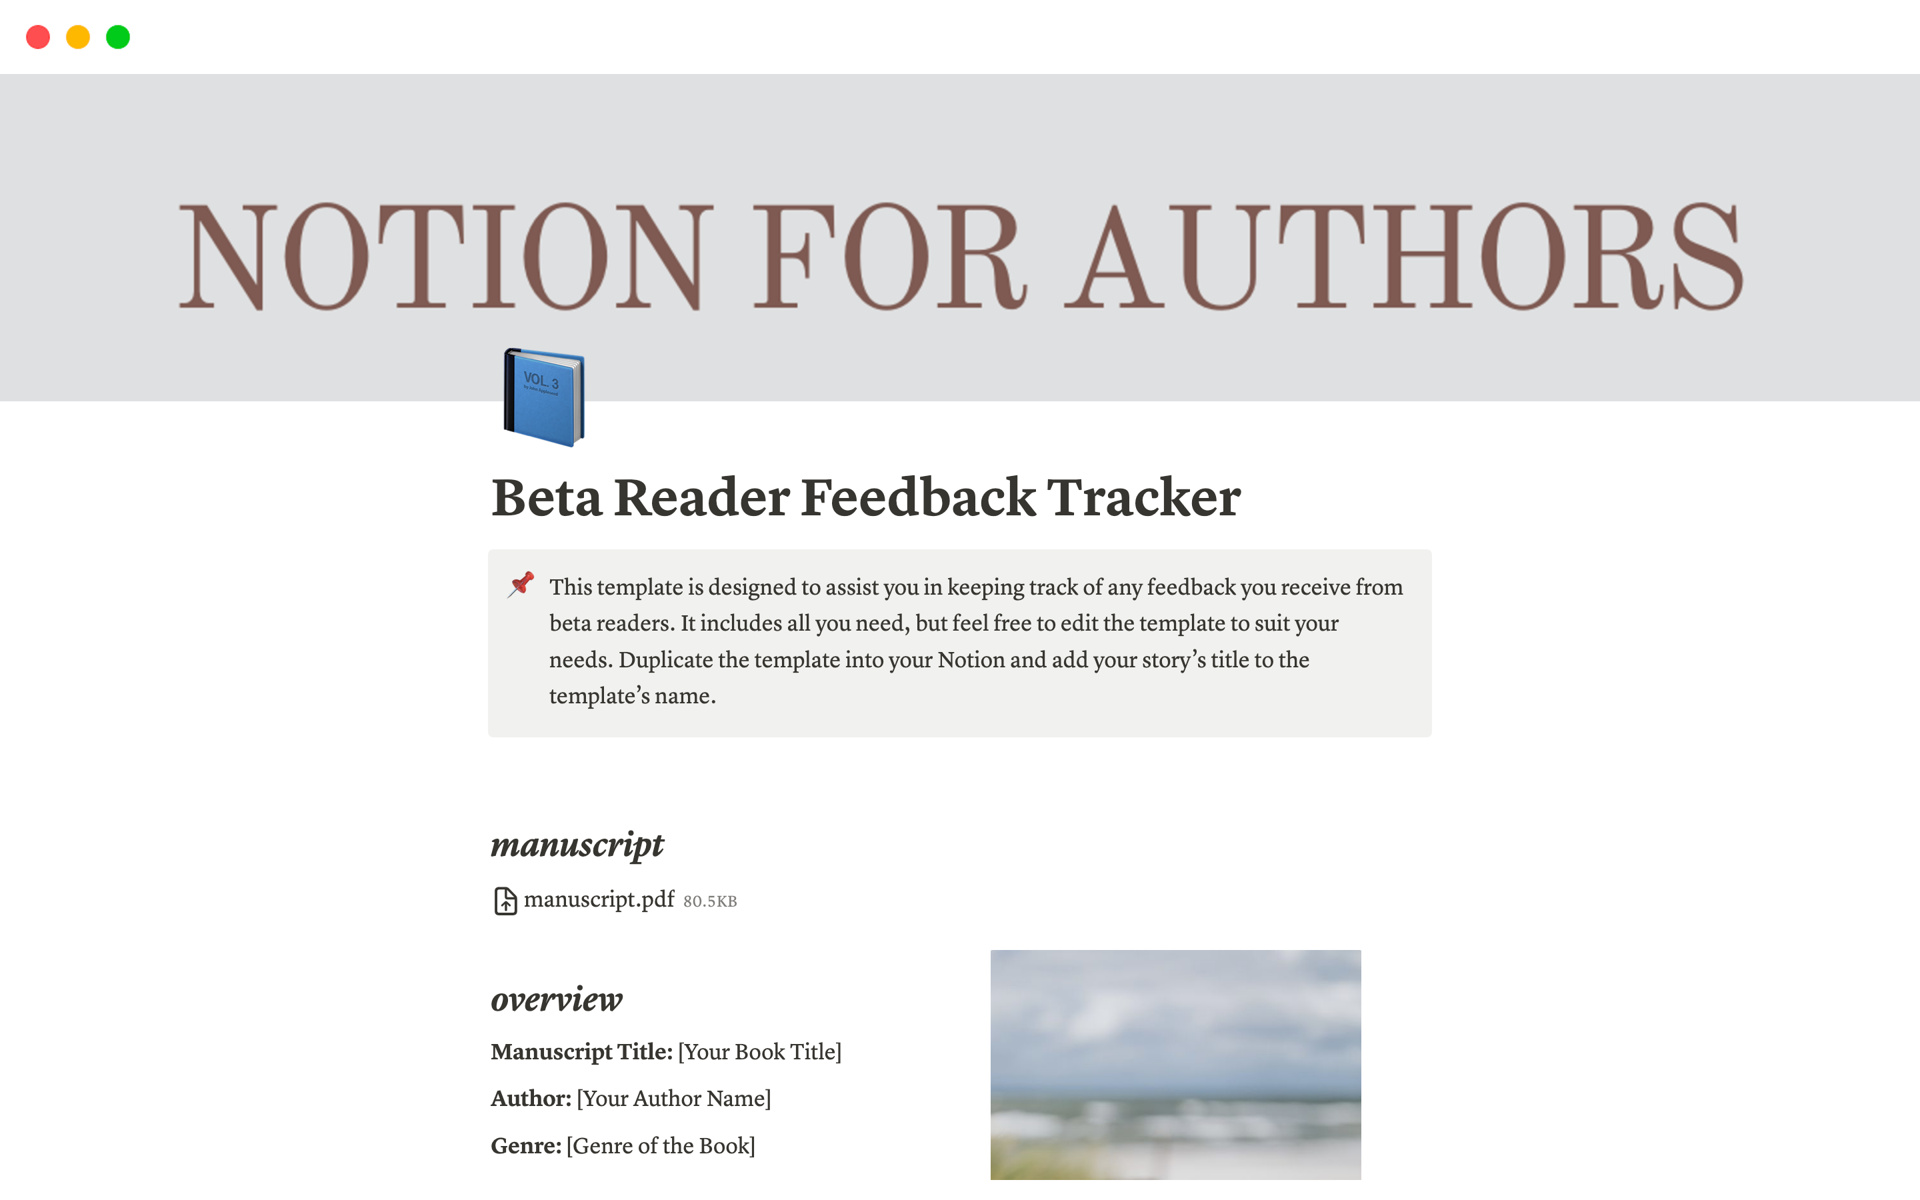 Vista previa de plantilla para Beta Reader Feedback Tracker